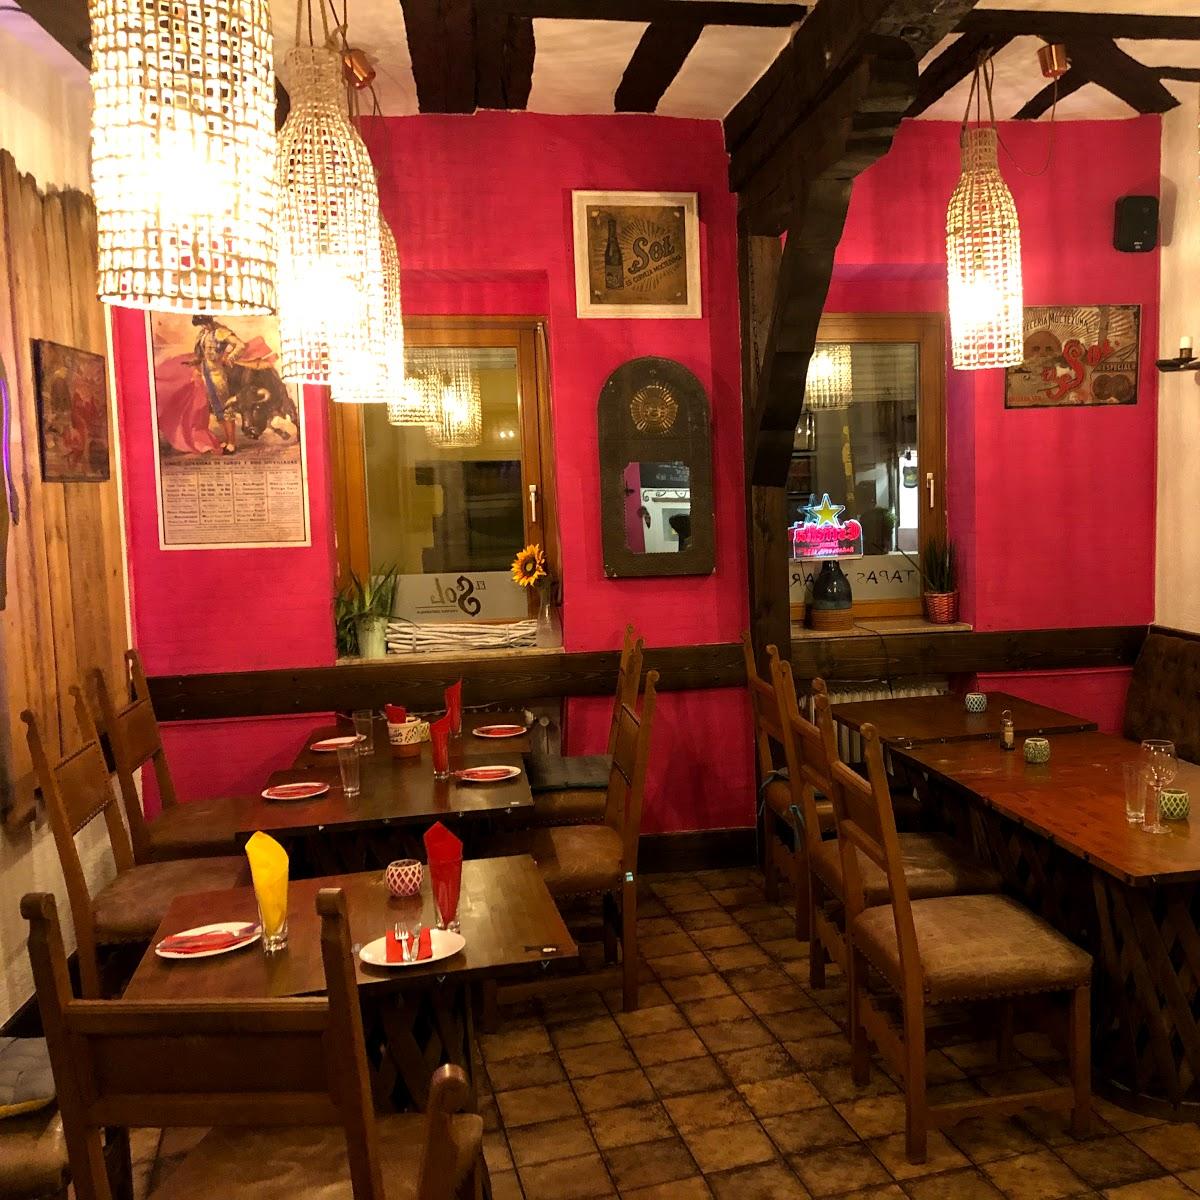 Restaurant "El Sol Tapas Bar" in Hanau